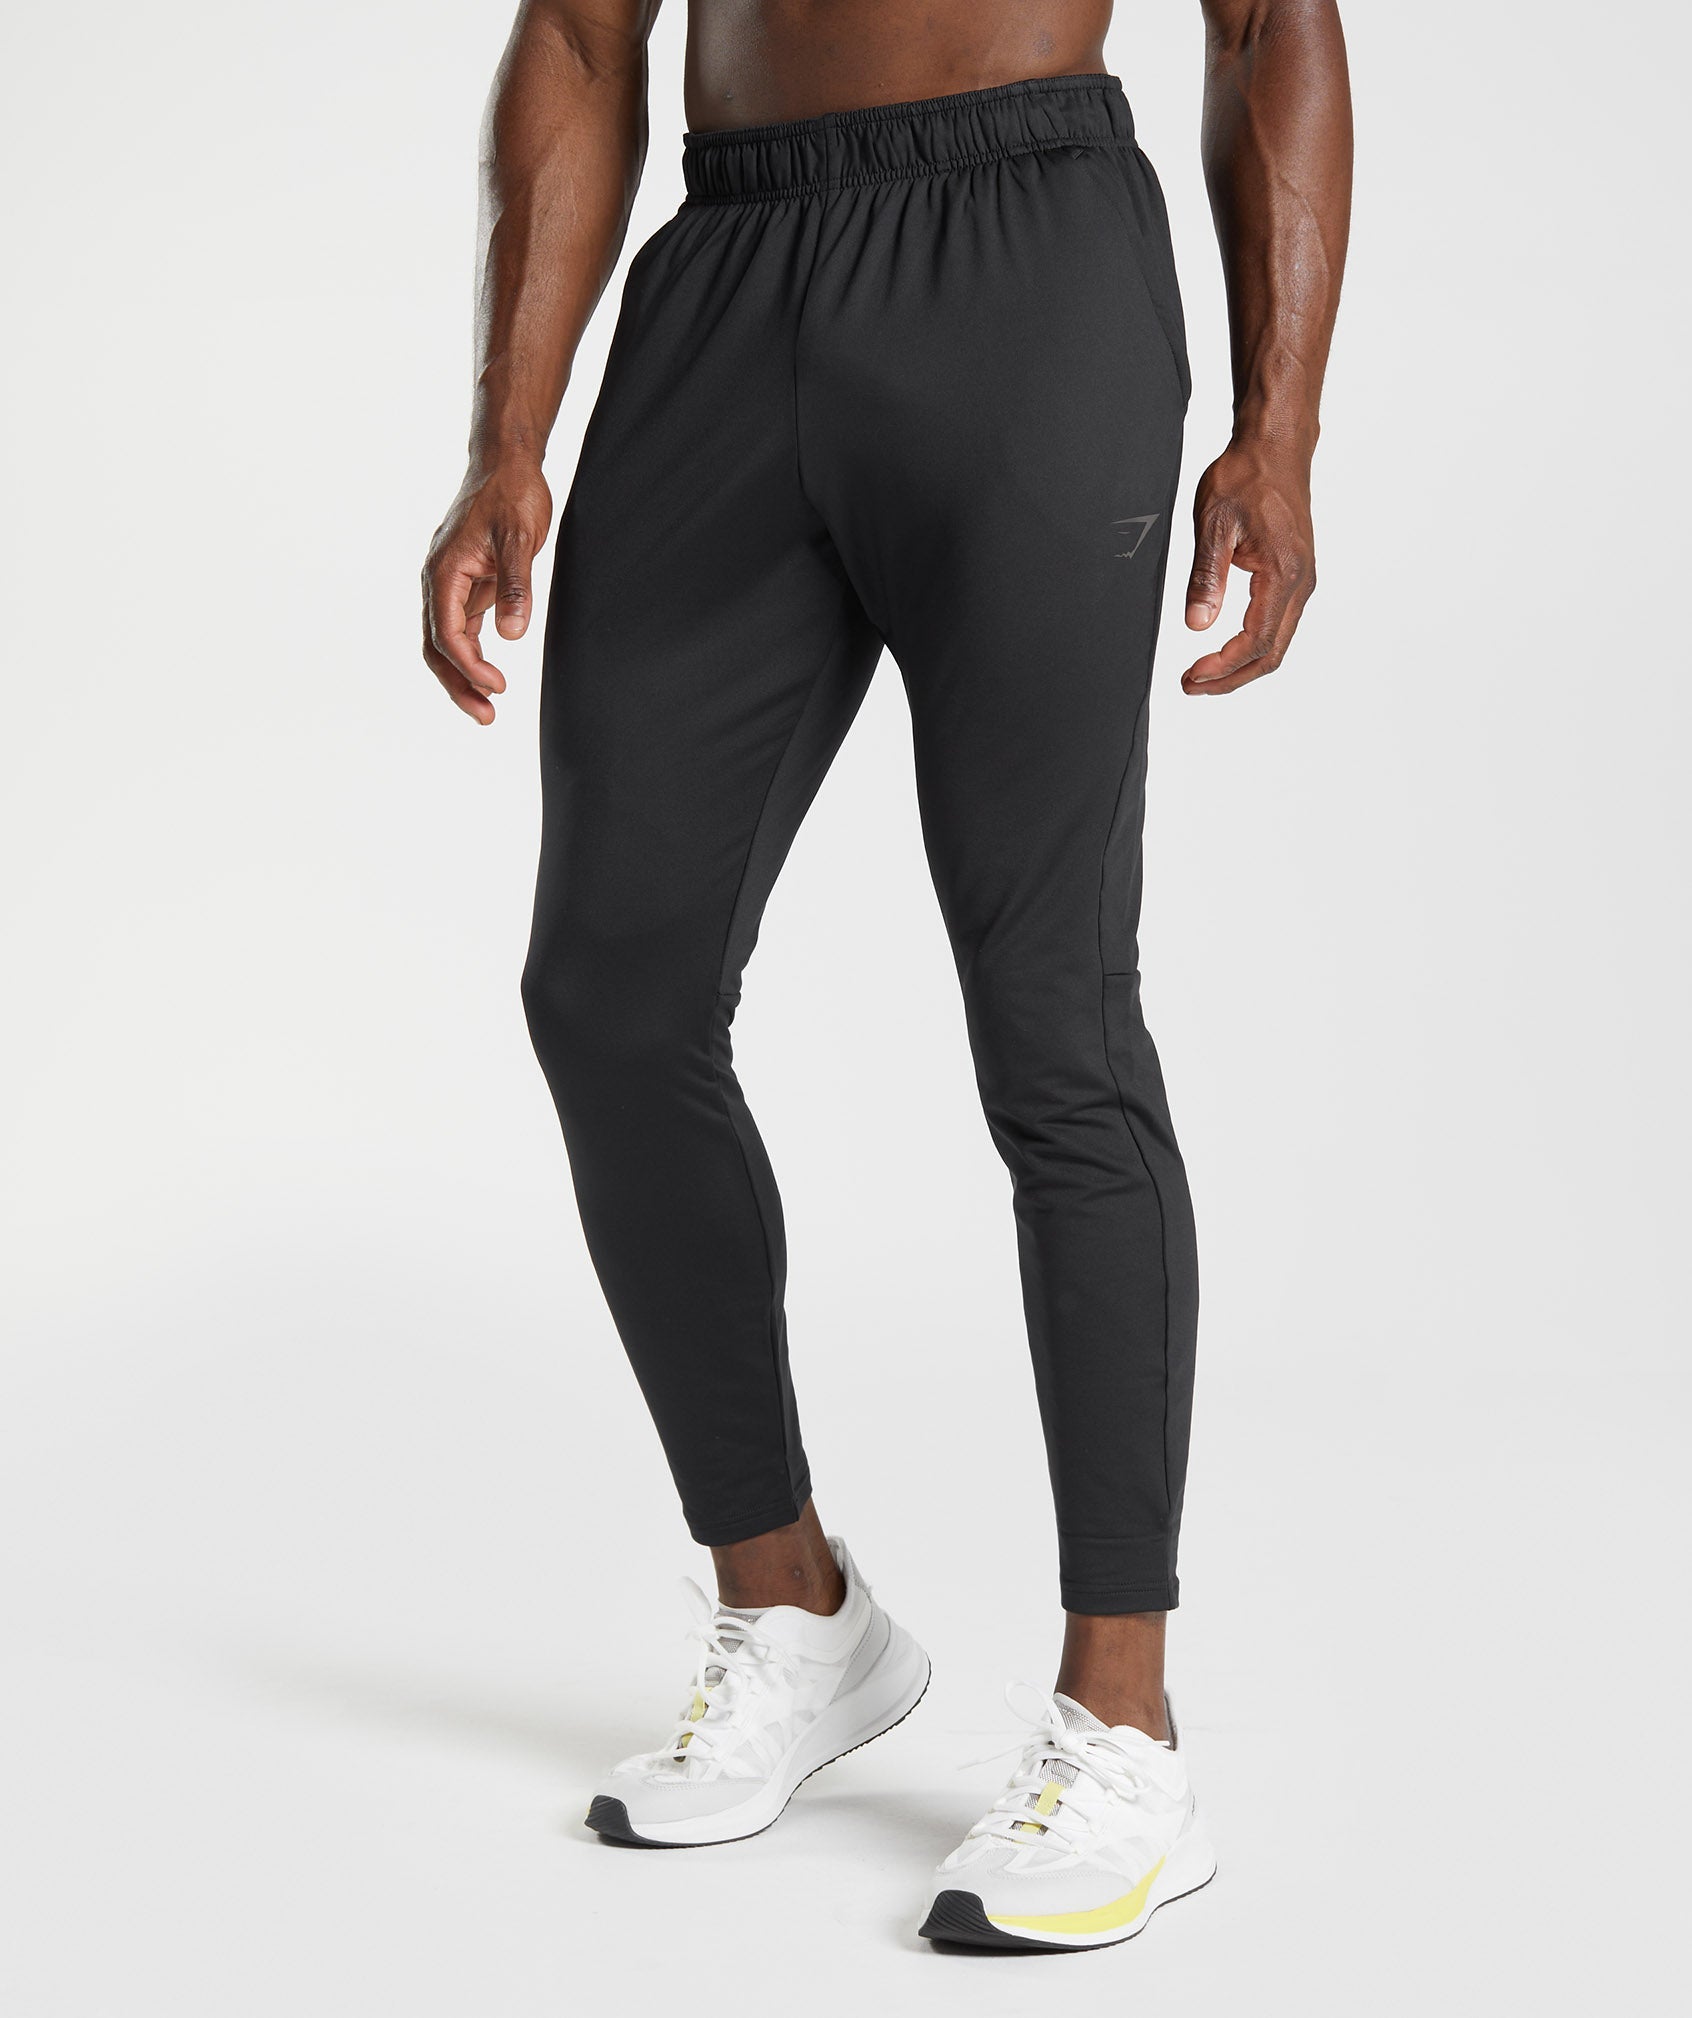 NWT! Gymshark Arrival Knit Charcoal Gray Joggers Men's XL Pants